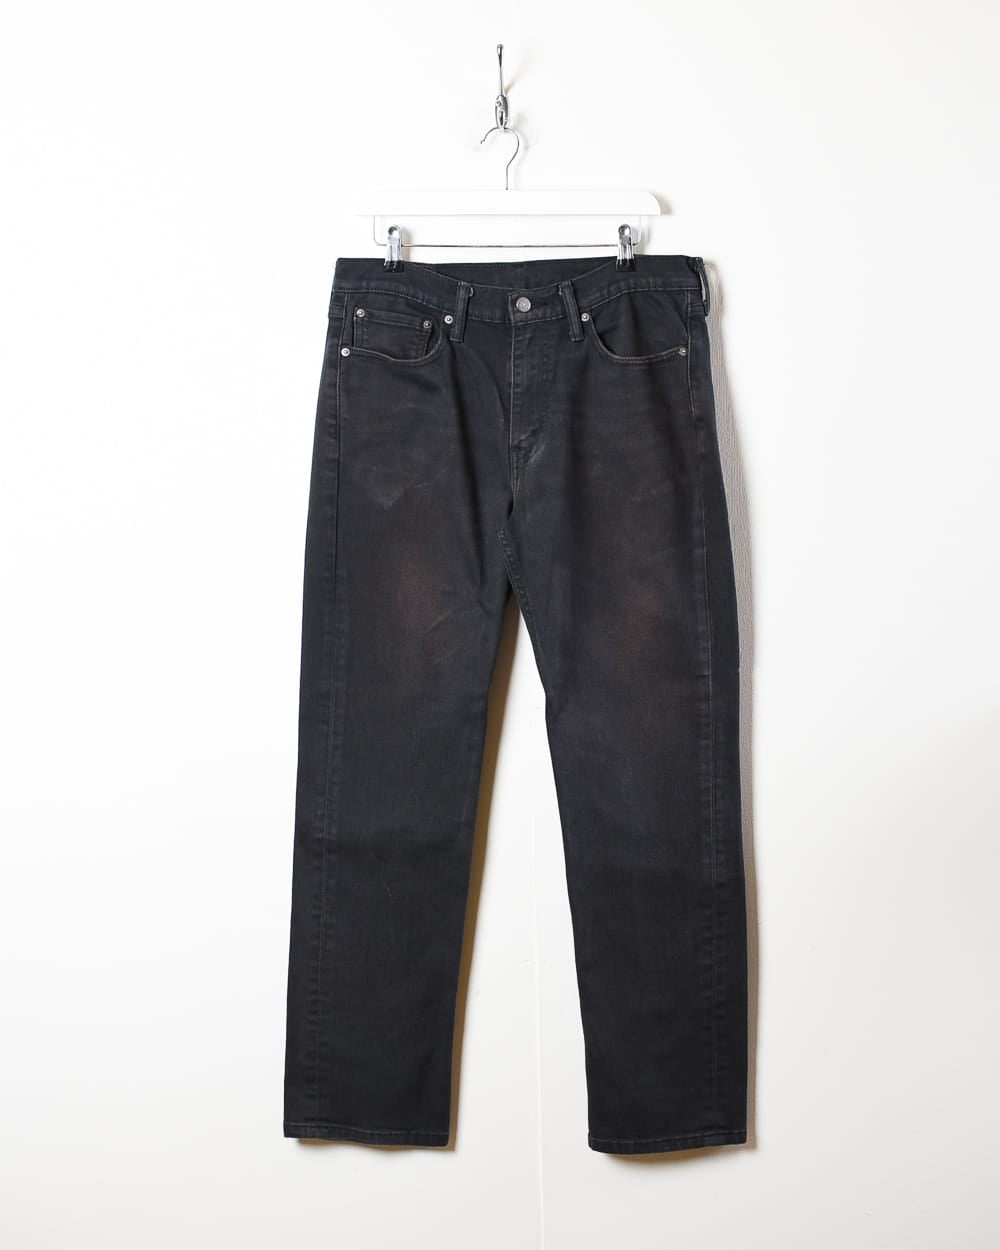 Black Levi's 514 Jeans - W34 L30